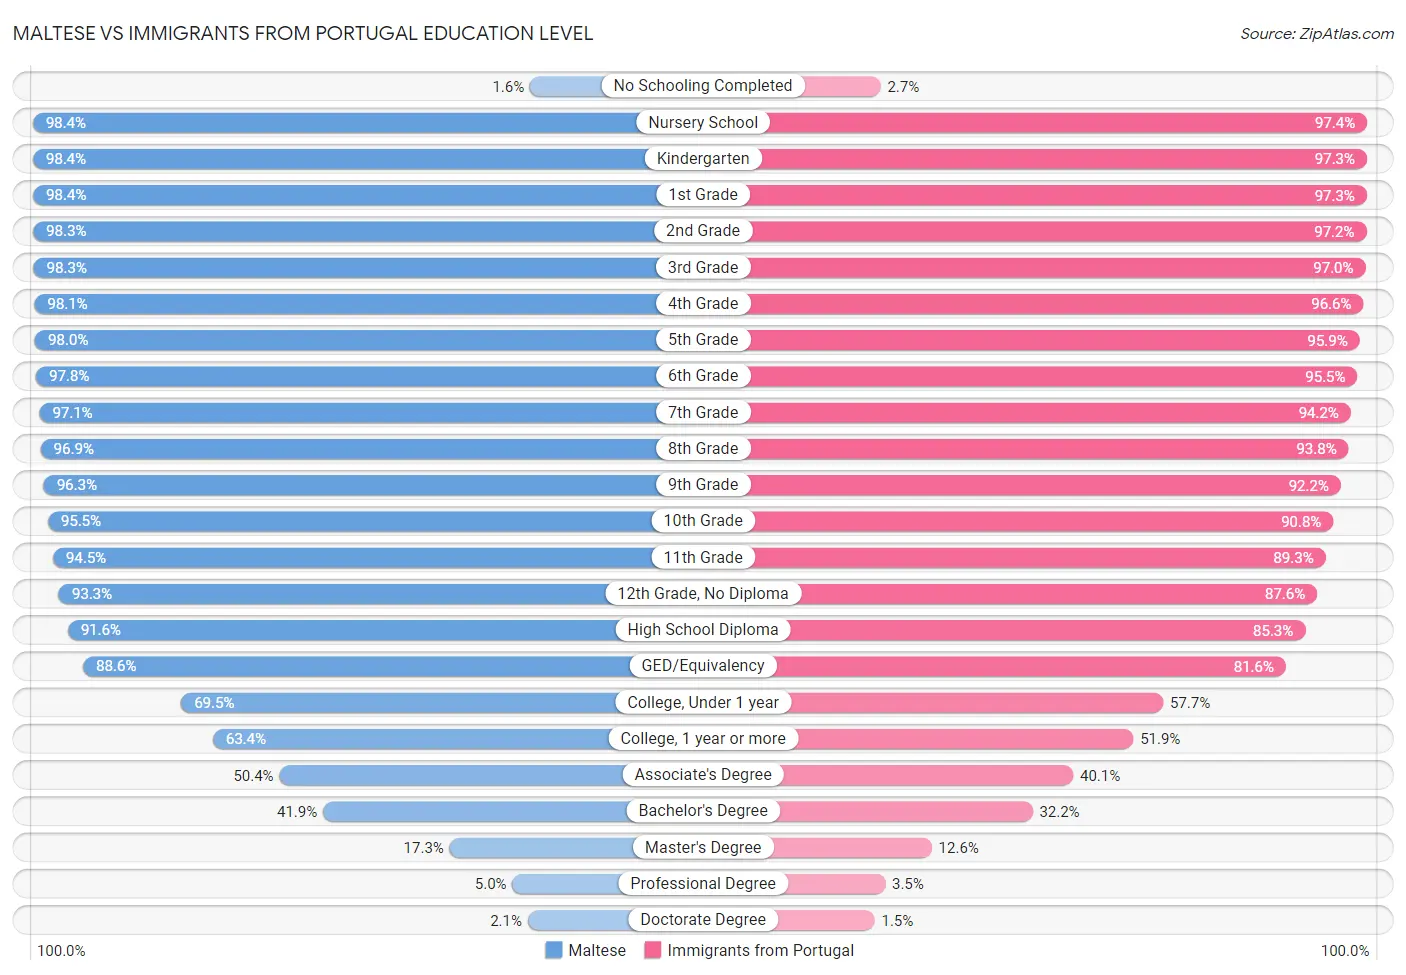 Maltese vs Immigrants from Portugal Education Level